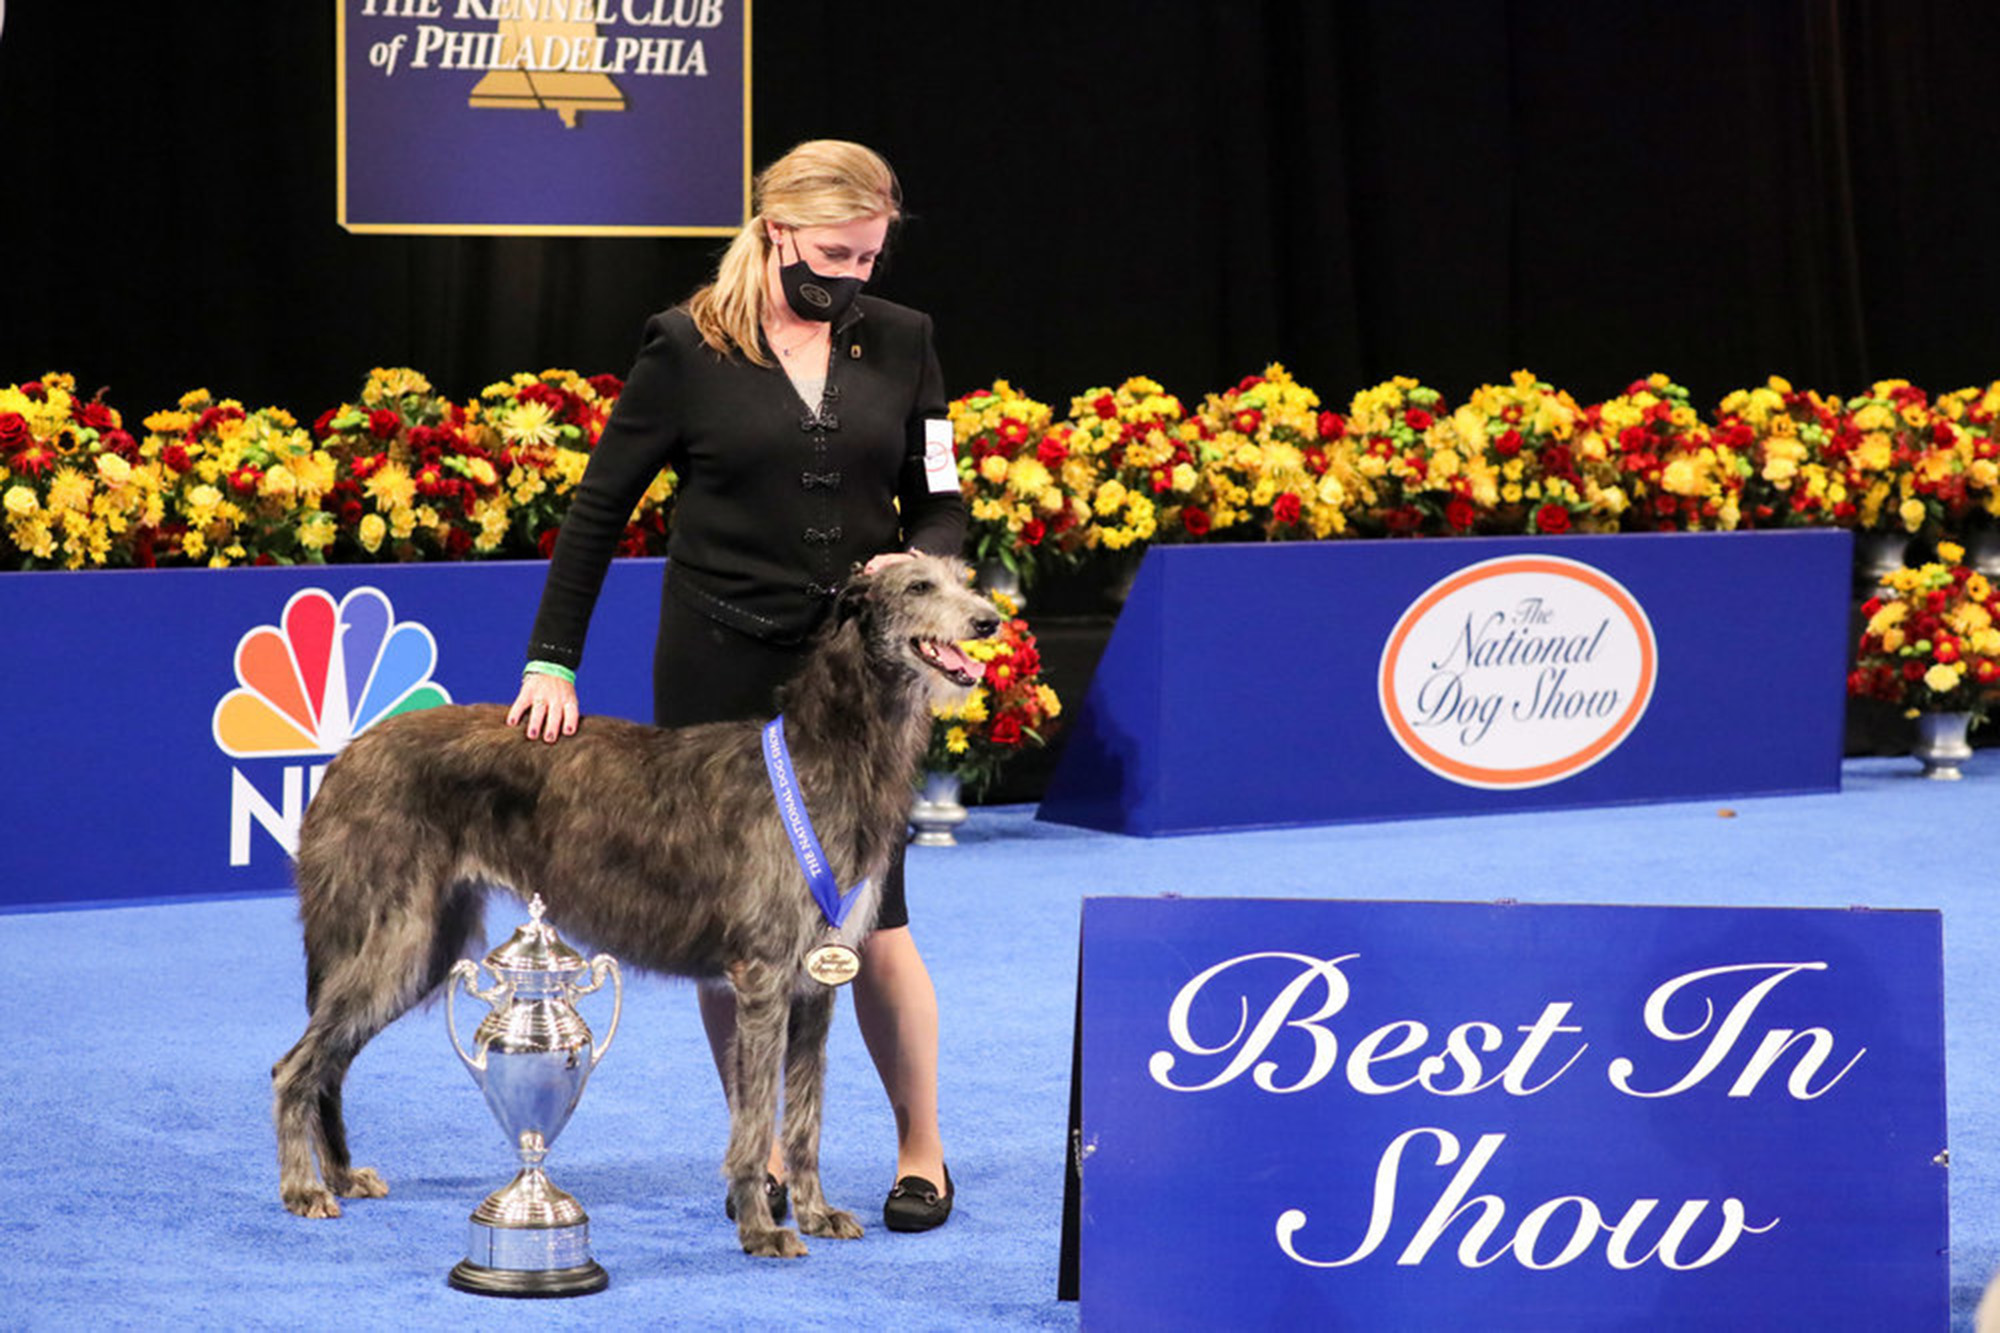 National Dog Show Best In Show Winner, Scottish Deerhound named 